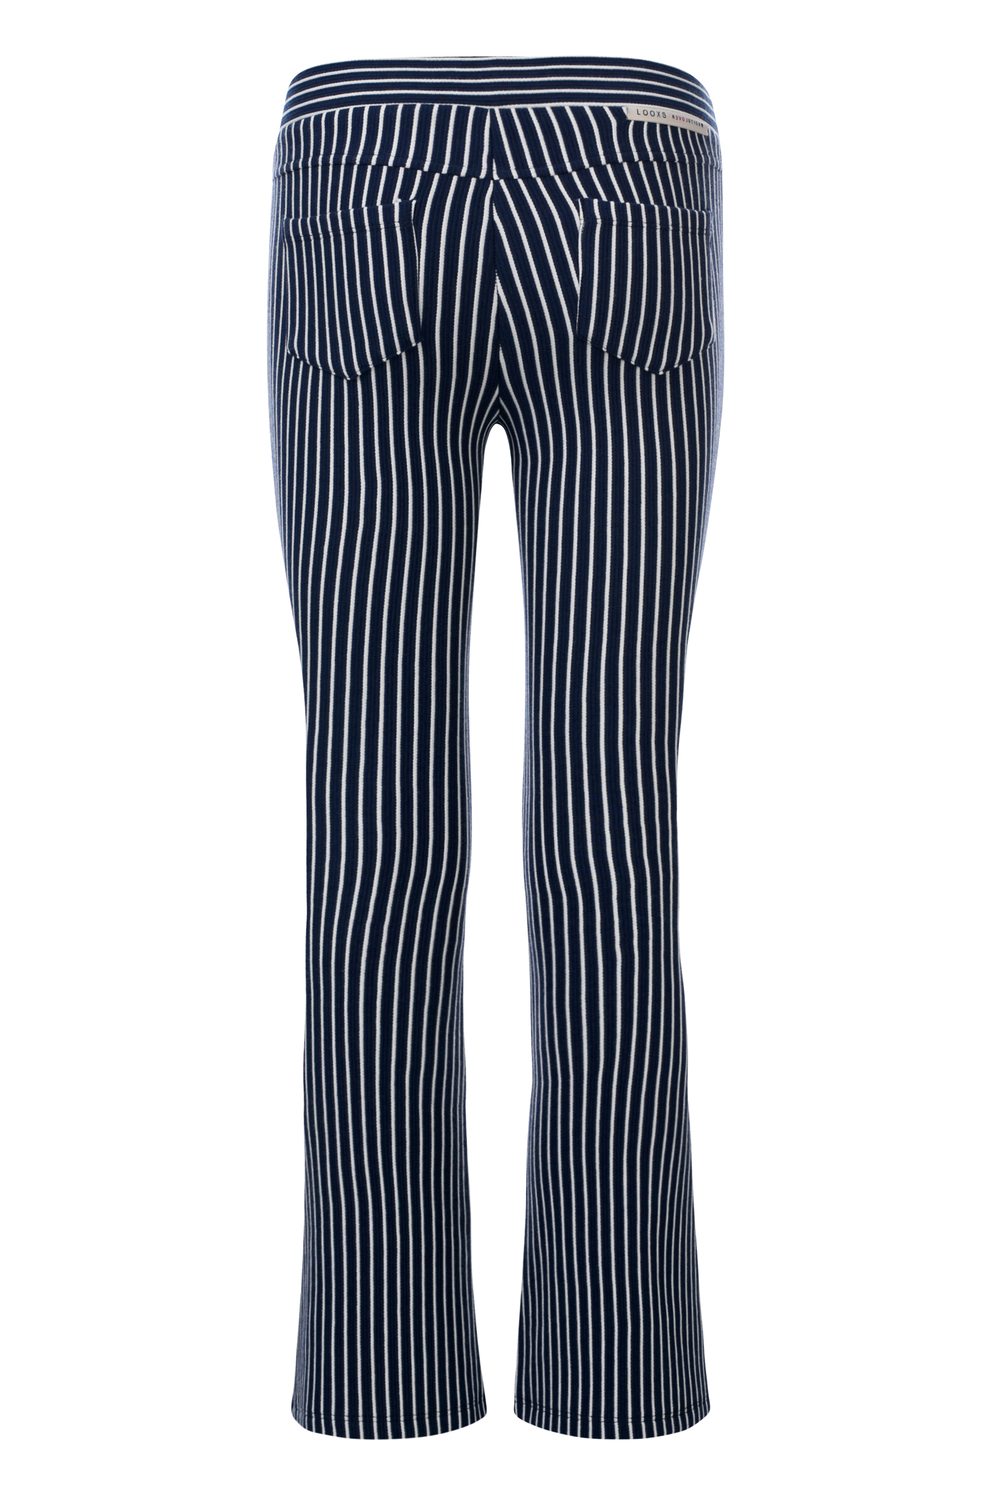 Loox's Revol. Long pants stripe flared Trousers